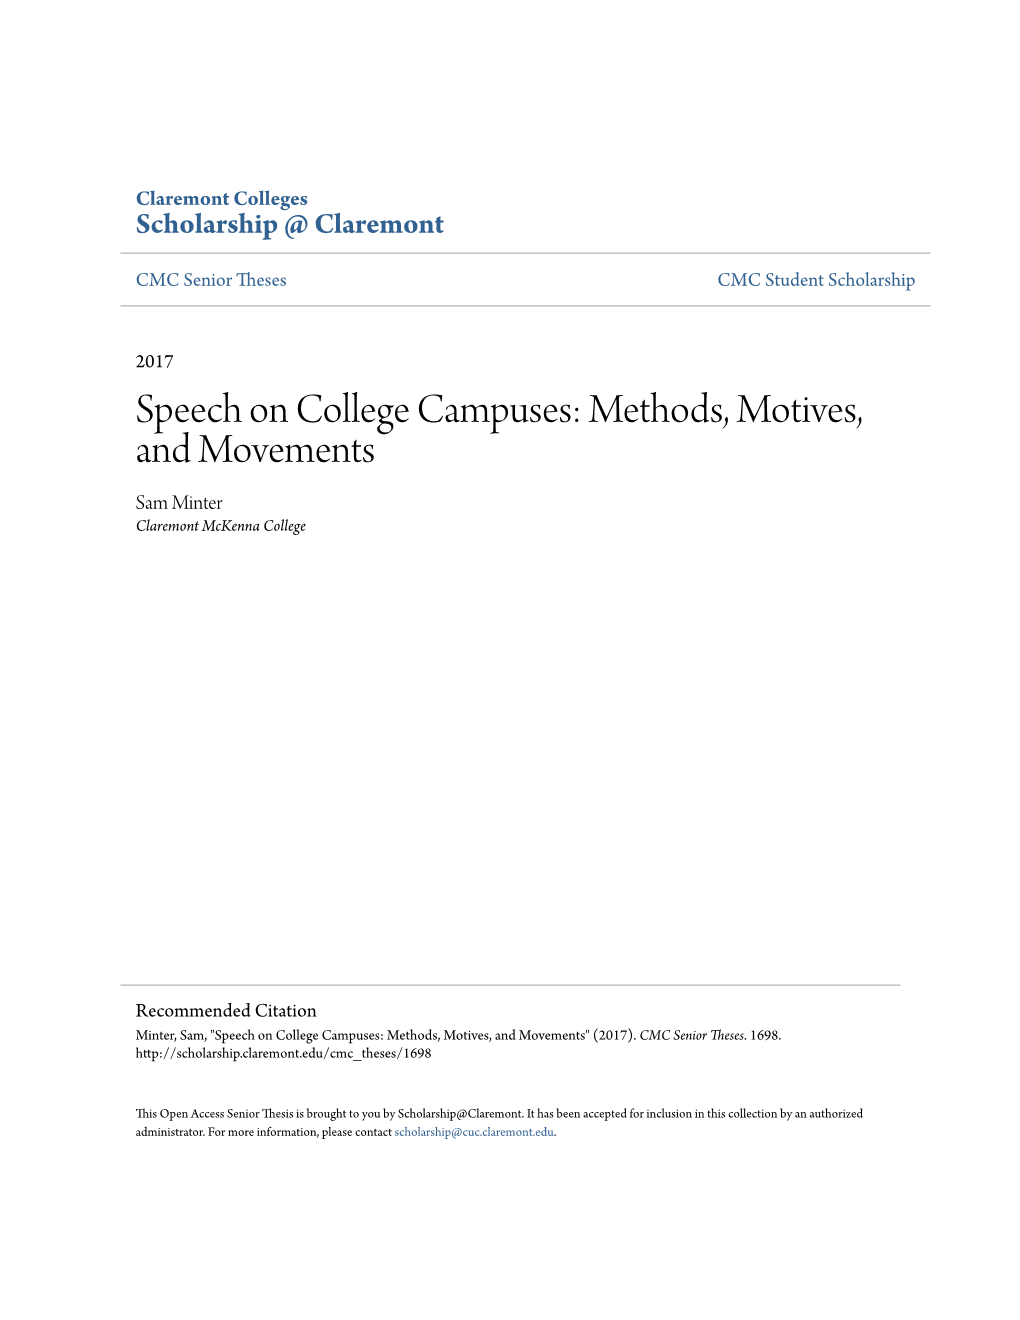 Speech on College Campuses: Methods, Motives, and Movements Sam Minter Claremont Mckenna College